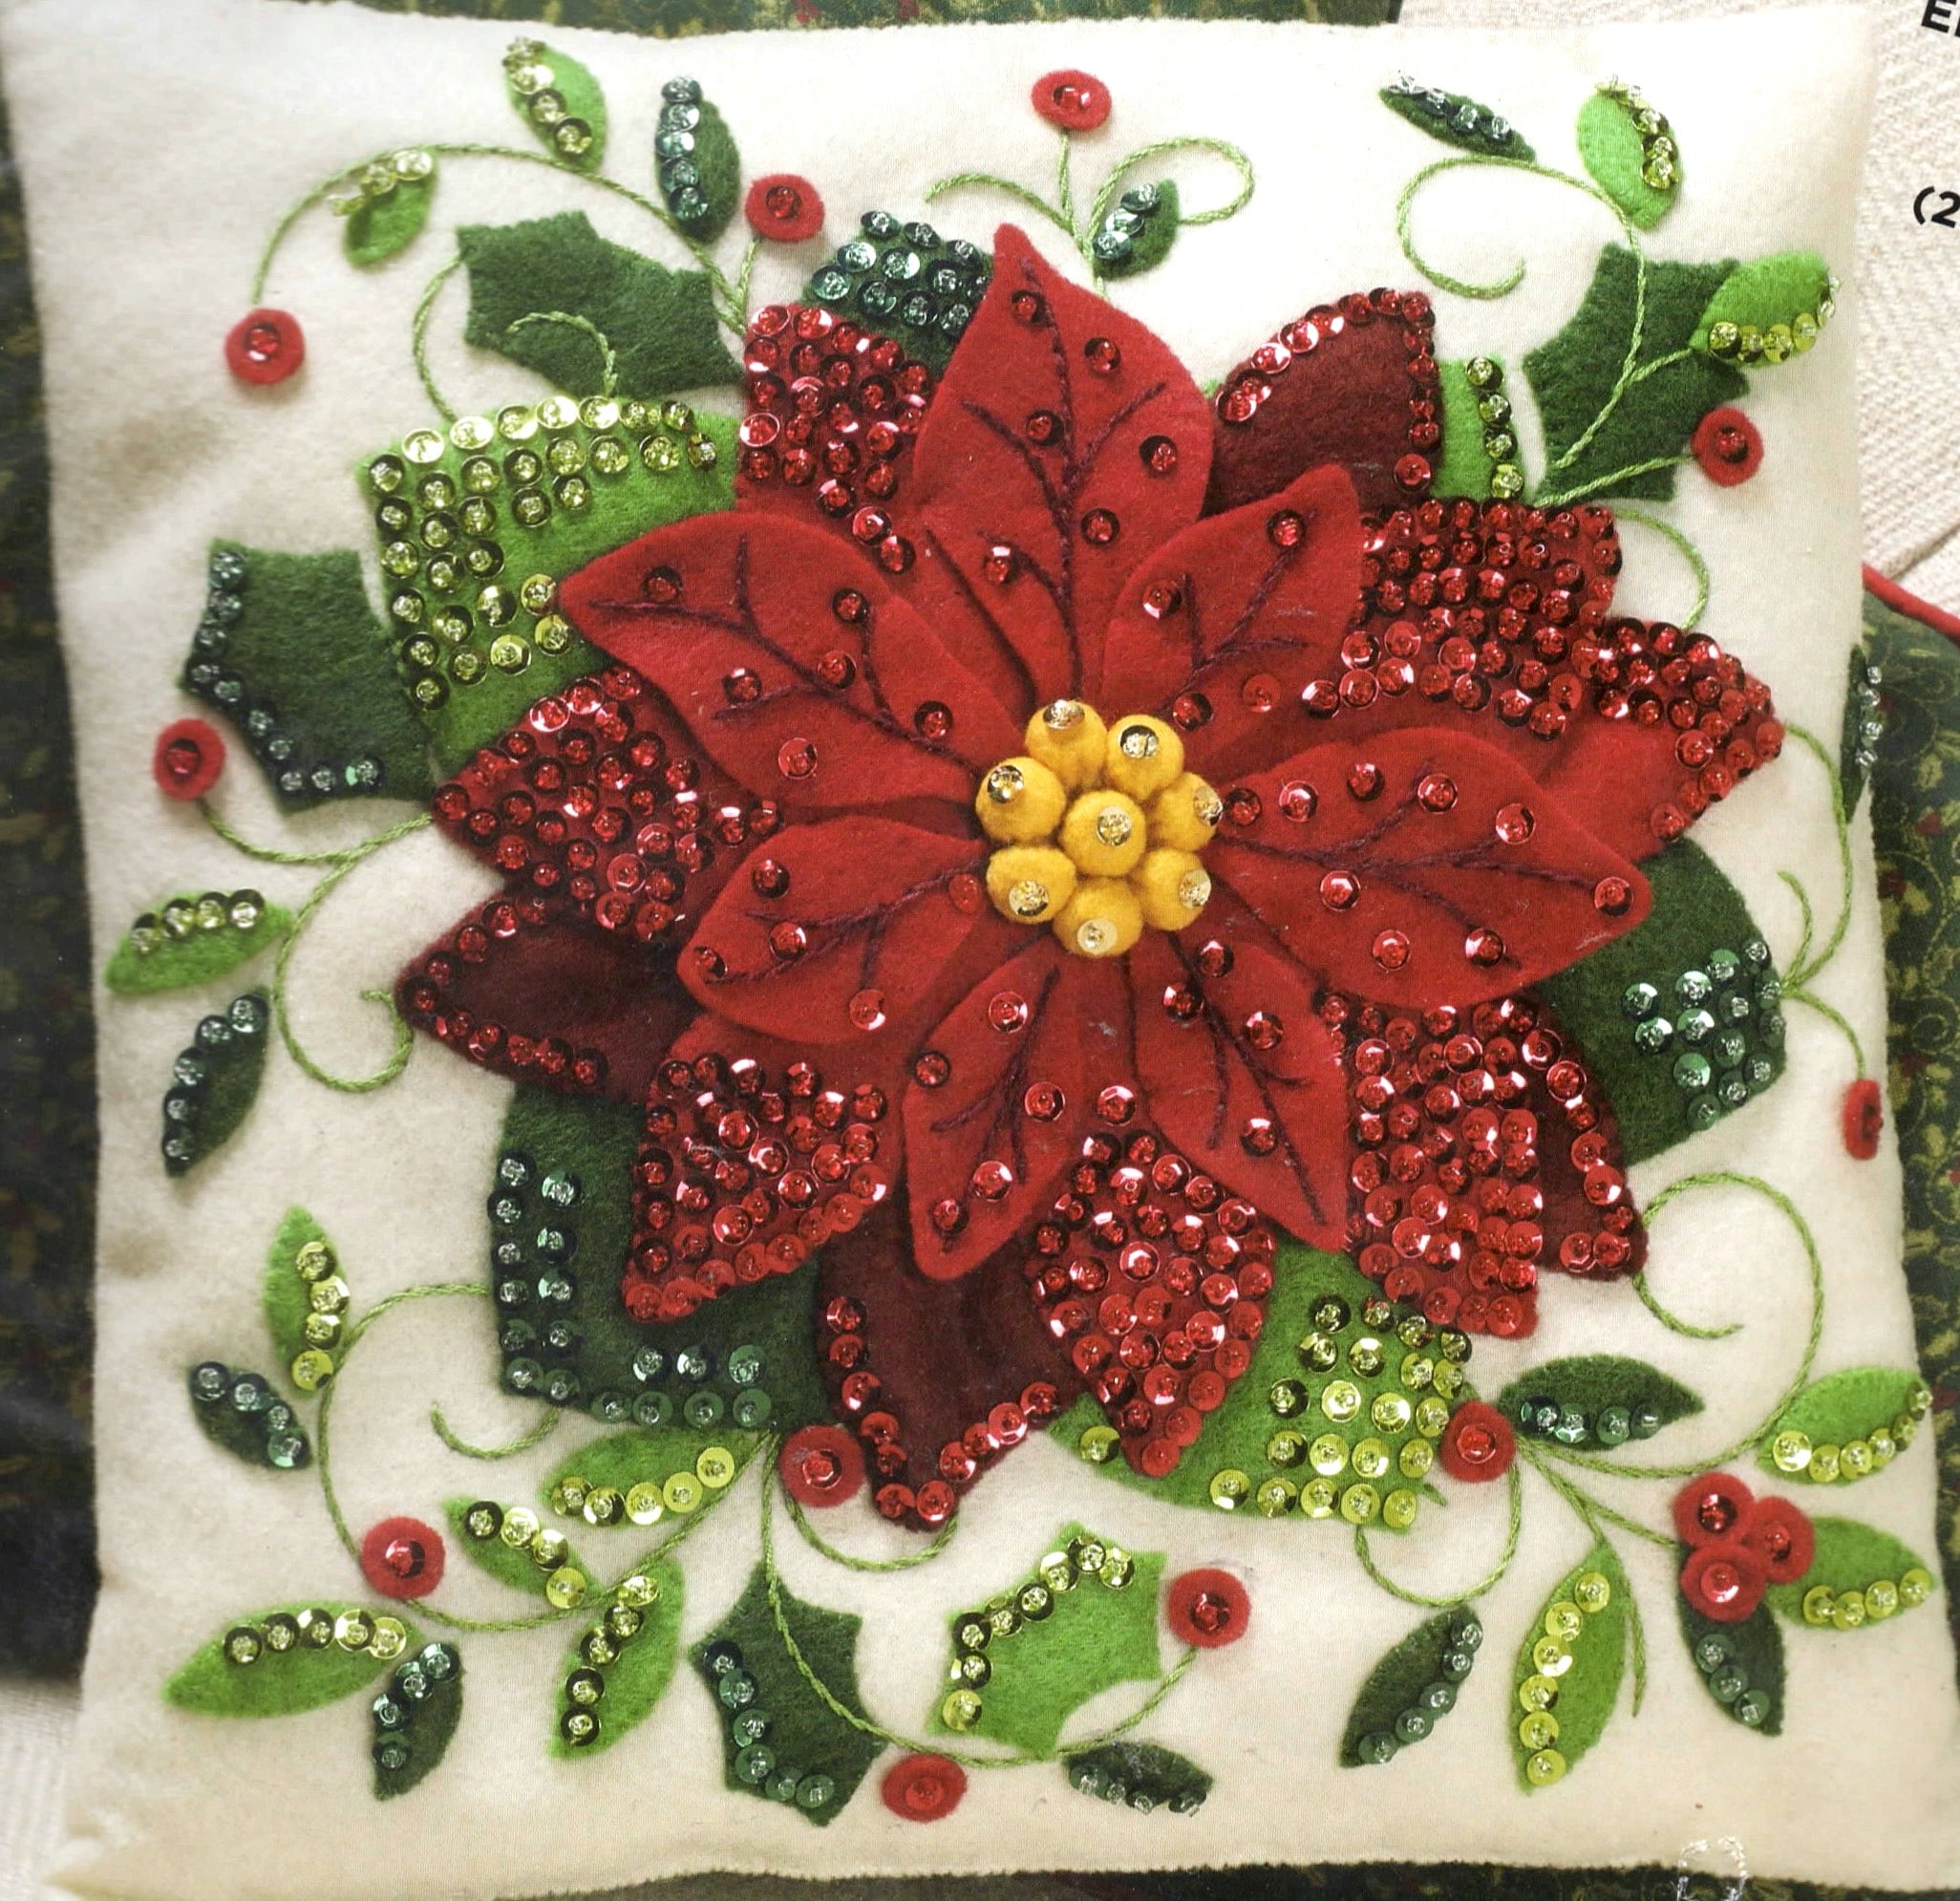 DIY Bucilla Elegant Poinsettia Christmas Holiday Felt Pillow Craft Kit 86983E